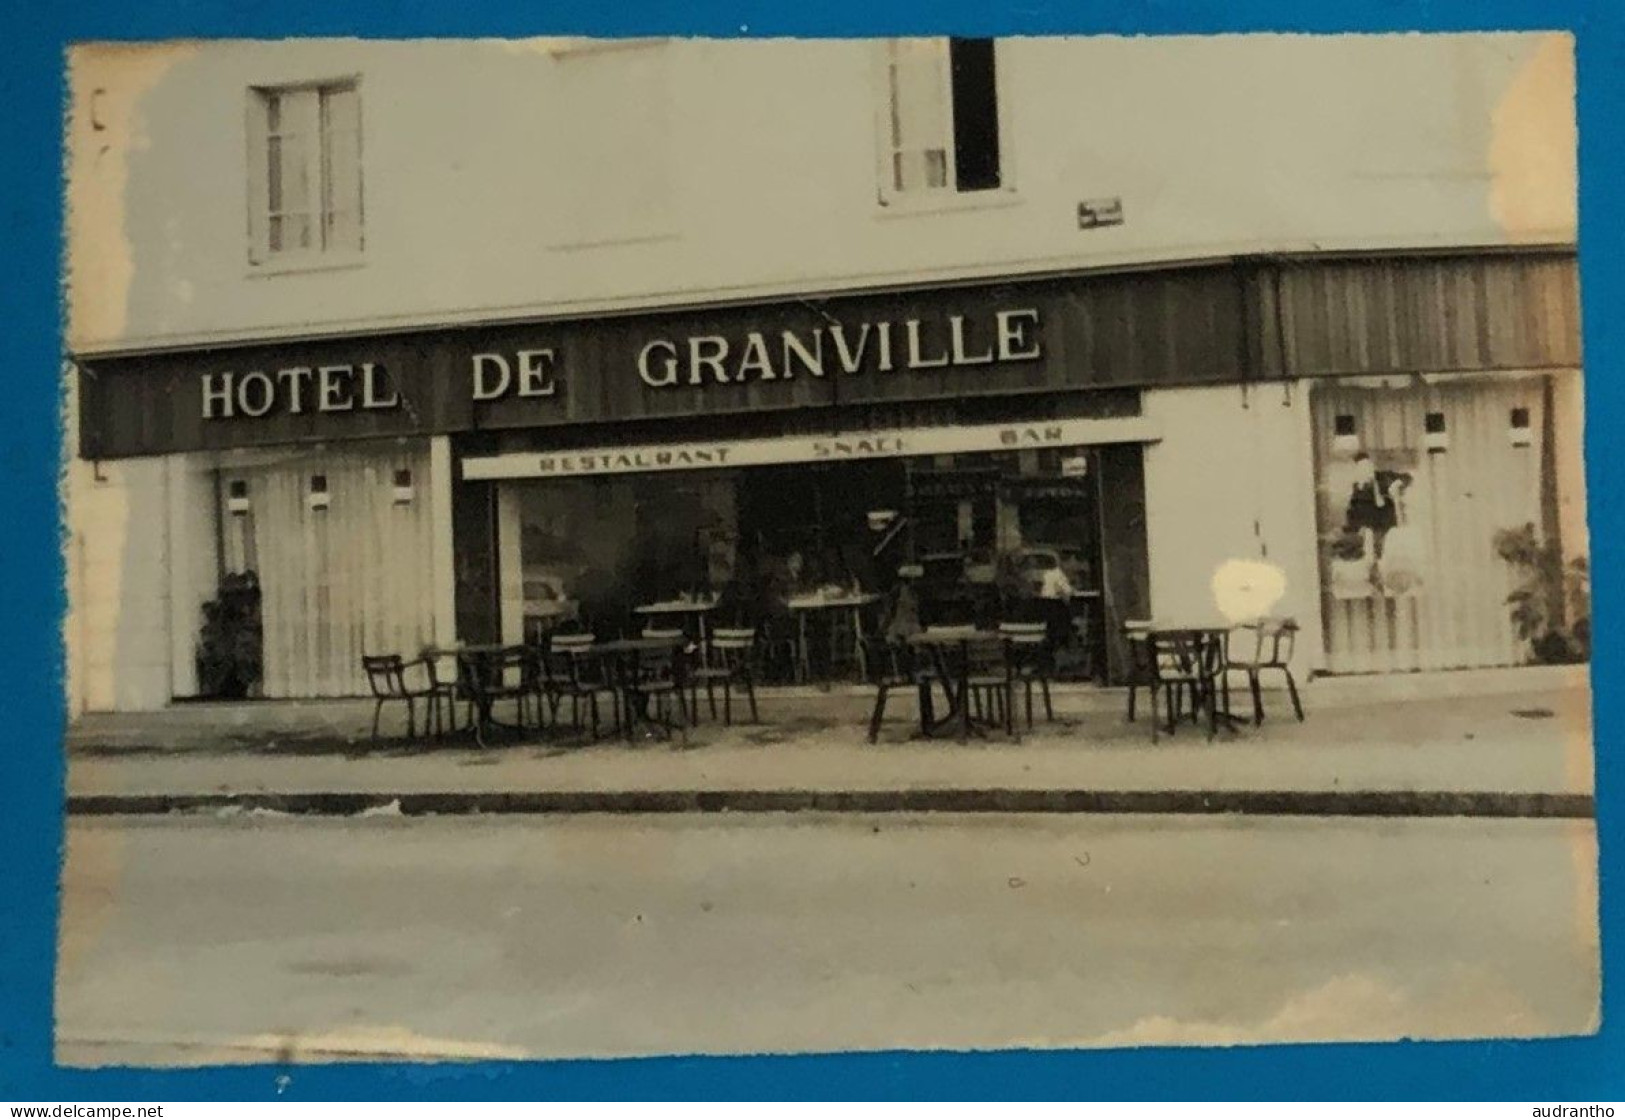 Ancien Cendrier Vide Poche En Verre HOTEL DE GRANVILLE Restaurant Snack Bar - Portacenere